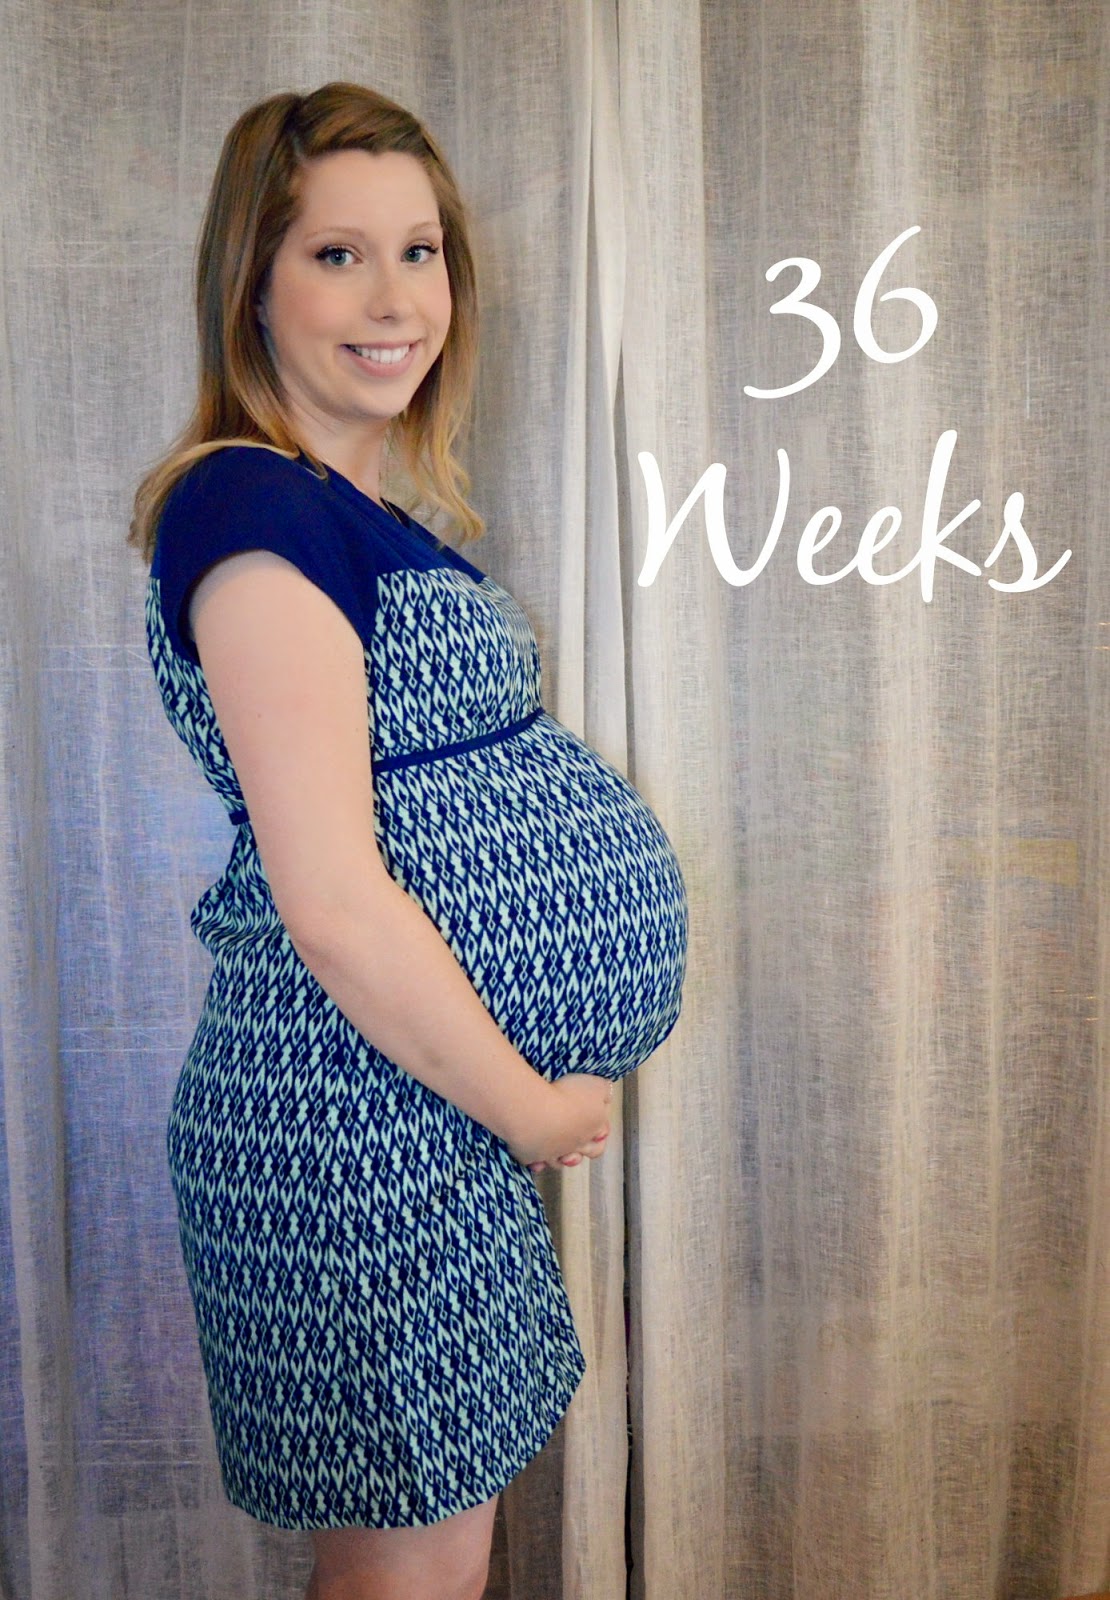 Orchard Girls Kenzie 36 Week Pregnancy Update Bump Picture